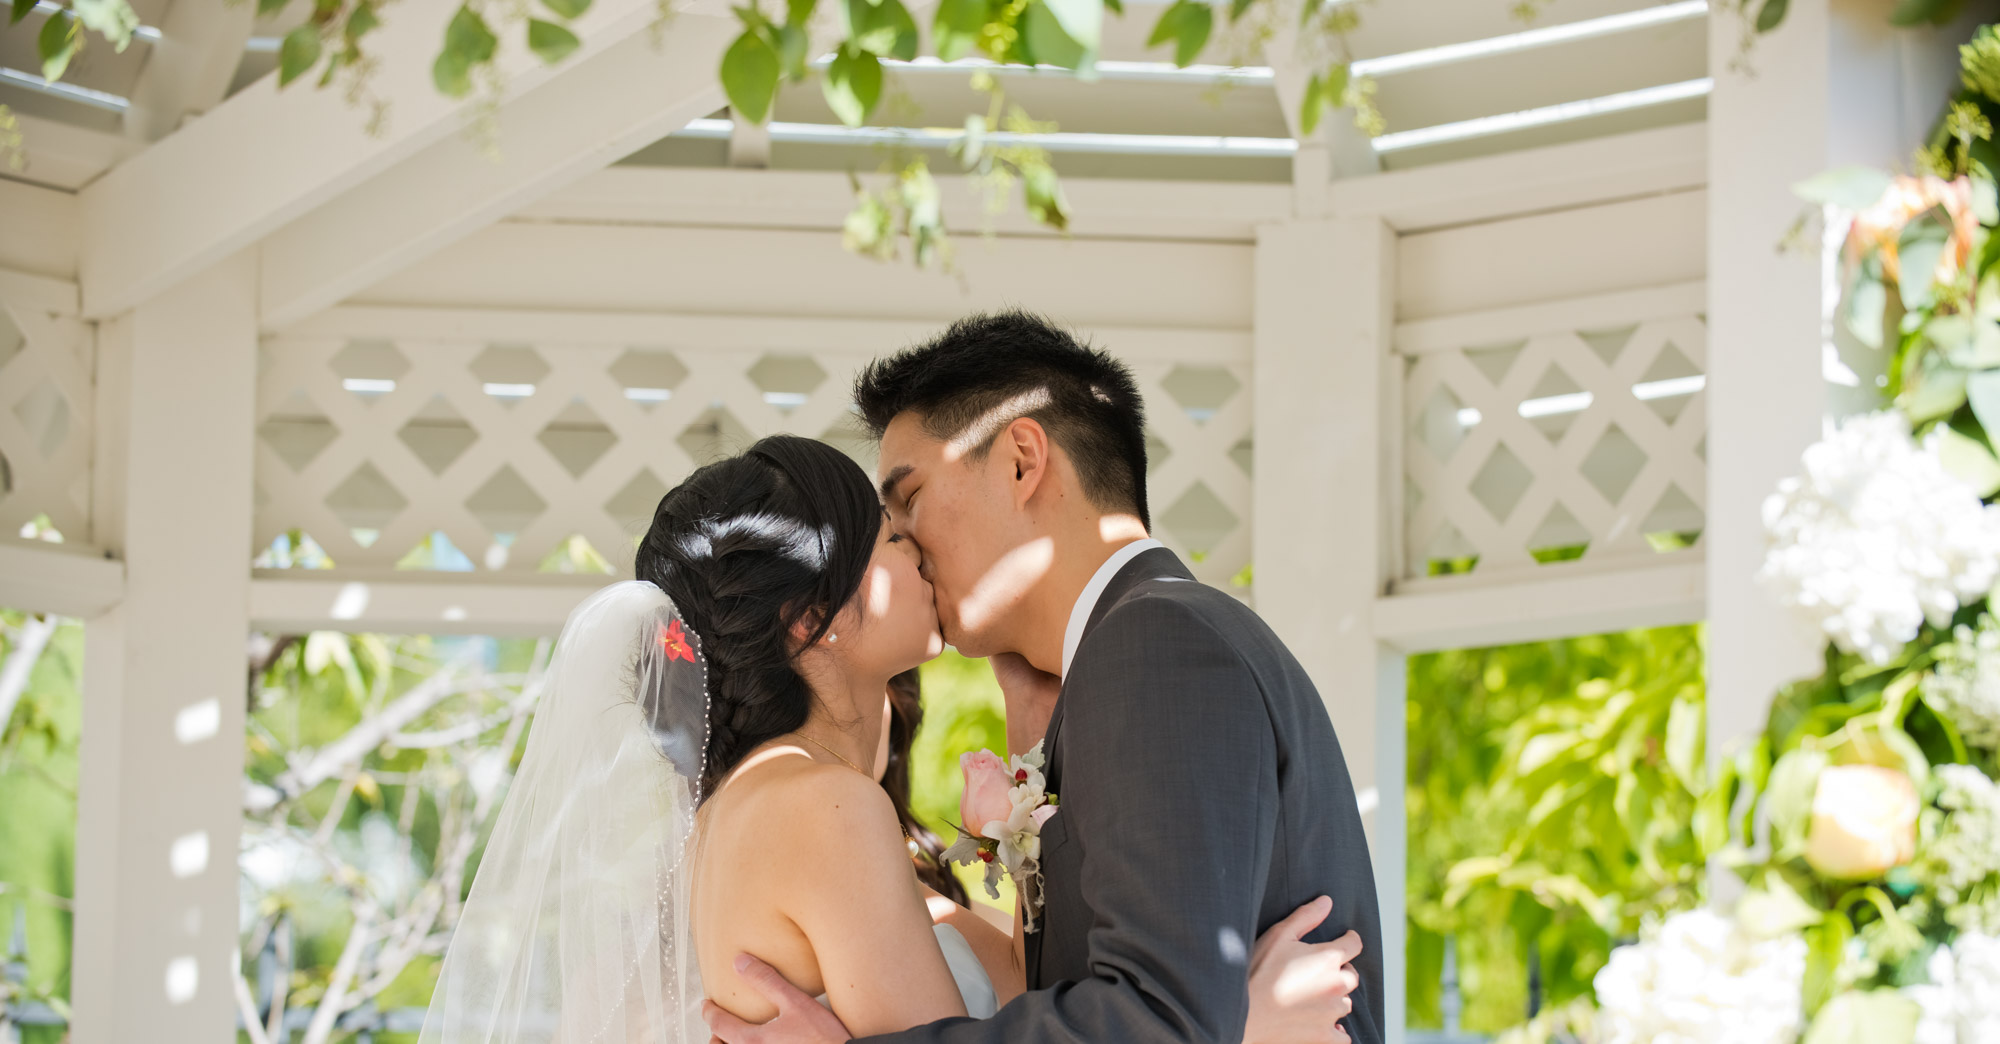 Sophia & Joey’s Backyard Wedding – Los Angeles DIY Wedding featured slider image